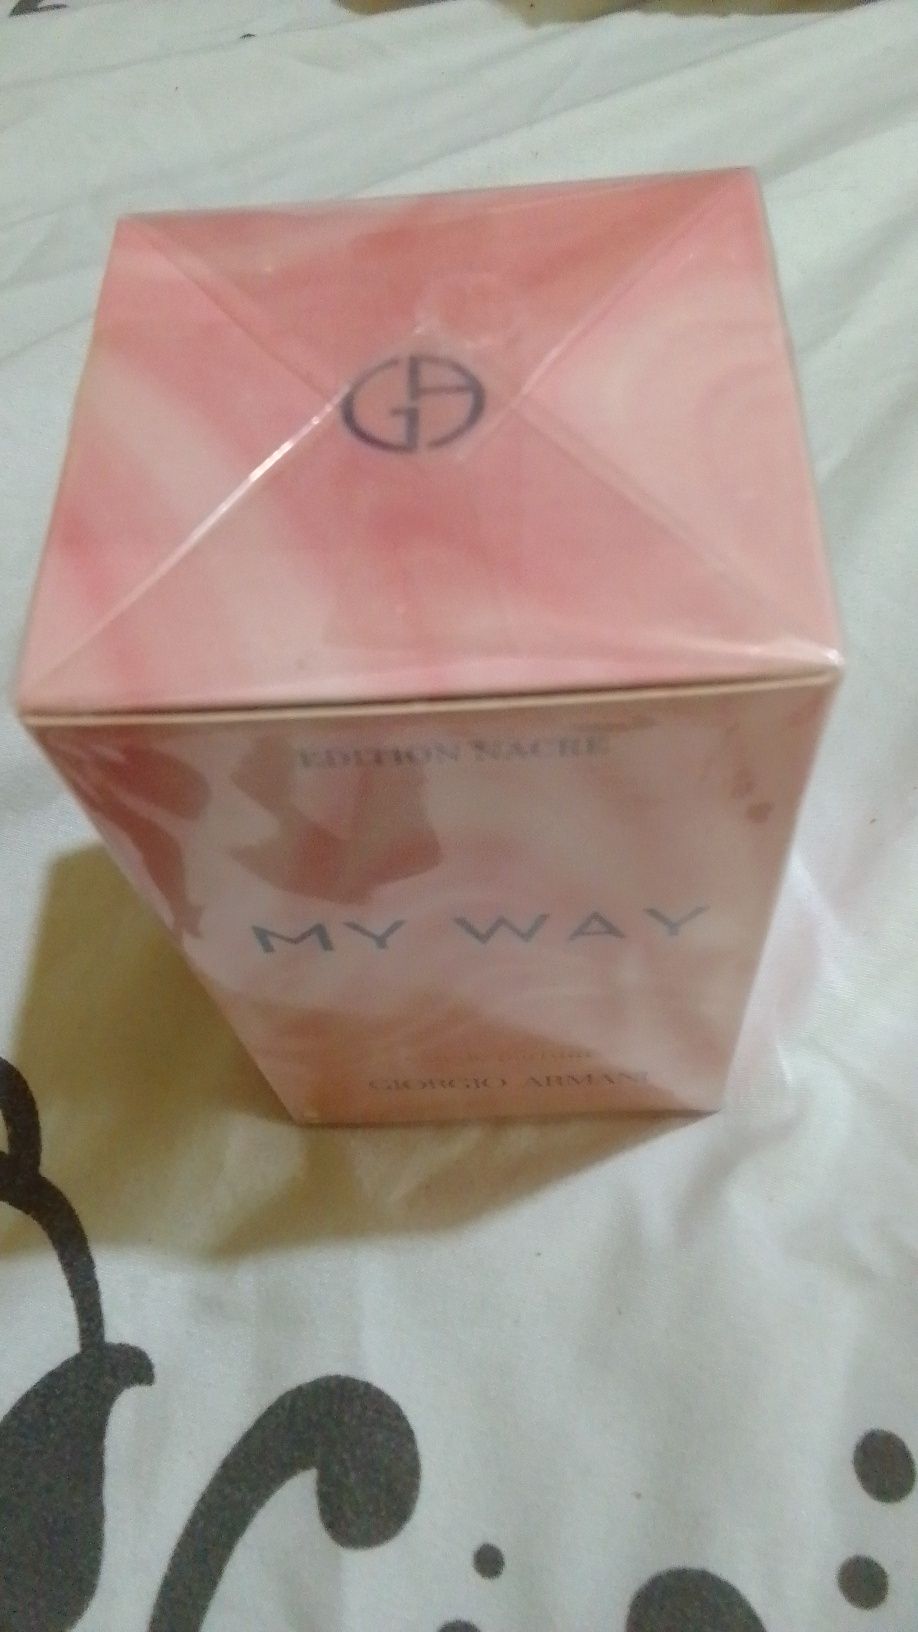 My way Armani parfum